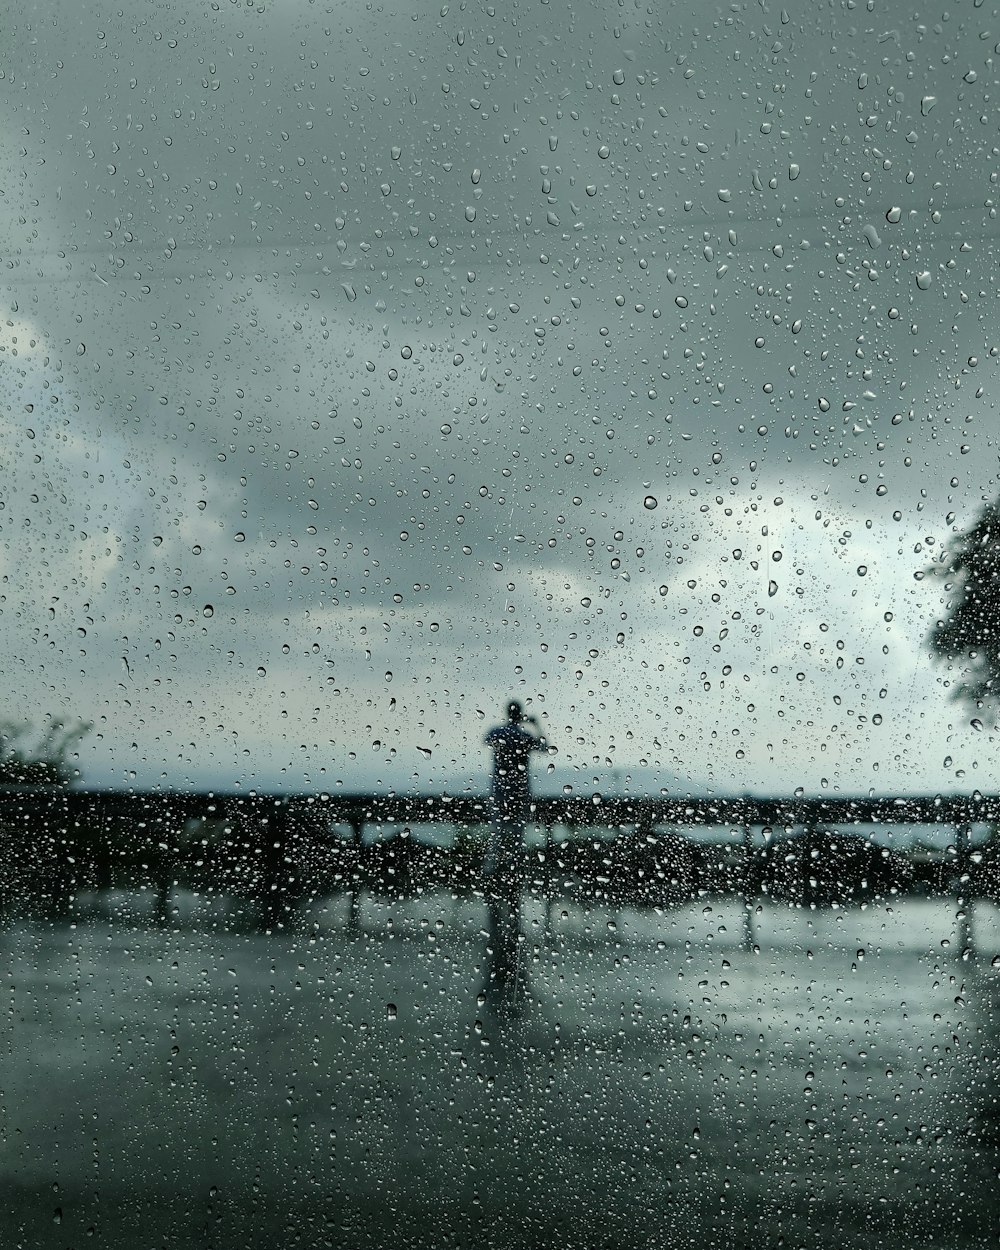 a person standing on a bridge in the rain